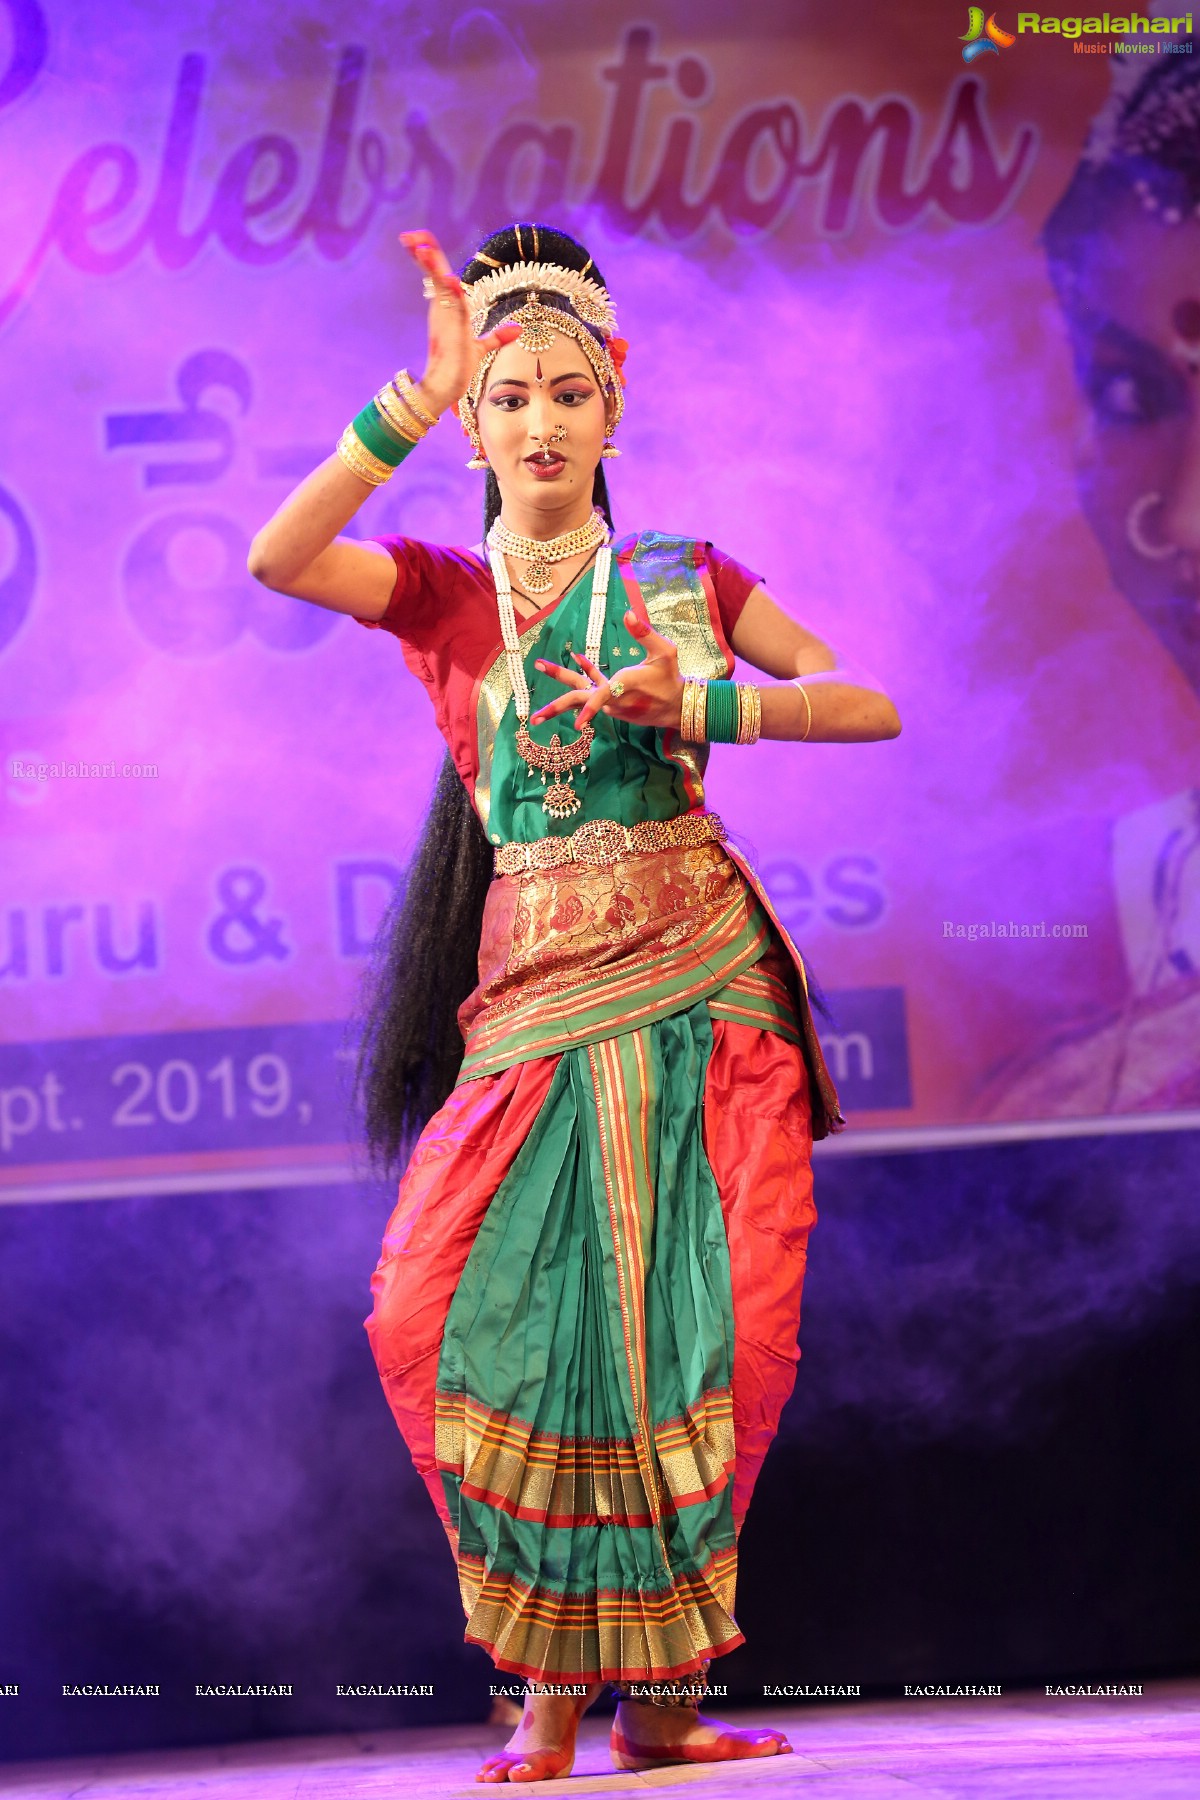 Samskruthi Art Academy - Warangal Celebrates 27th Annual Day